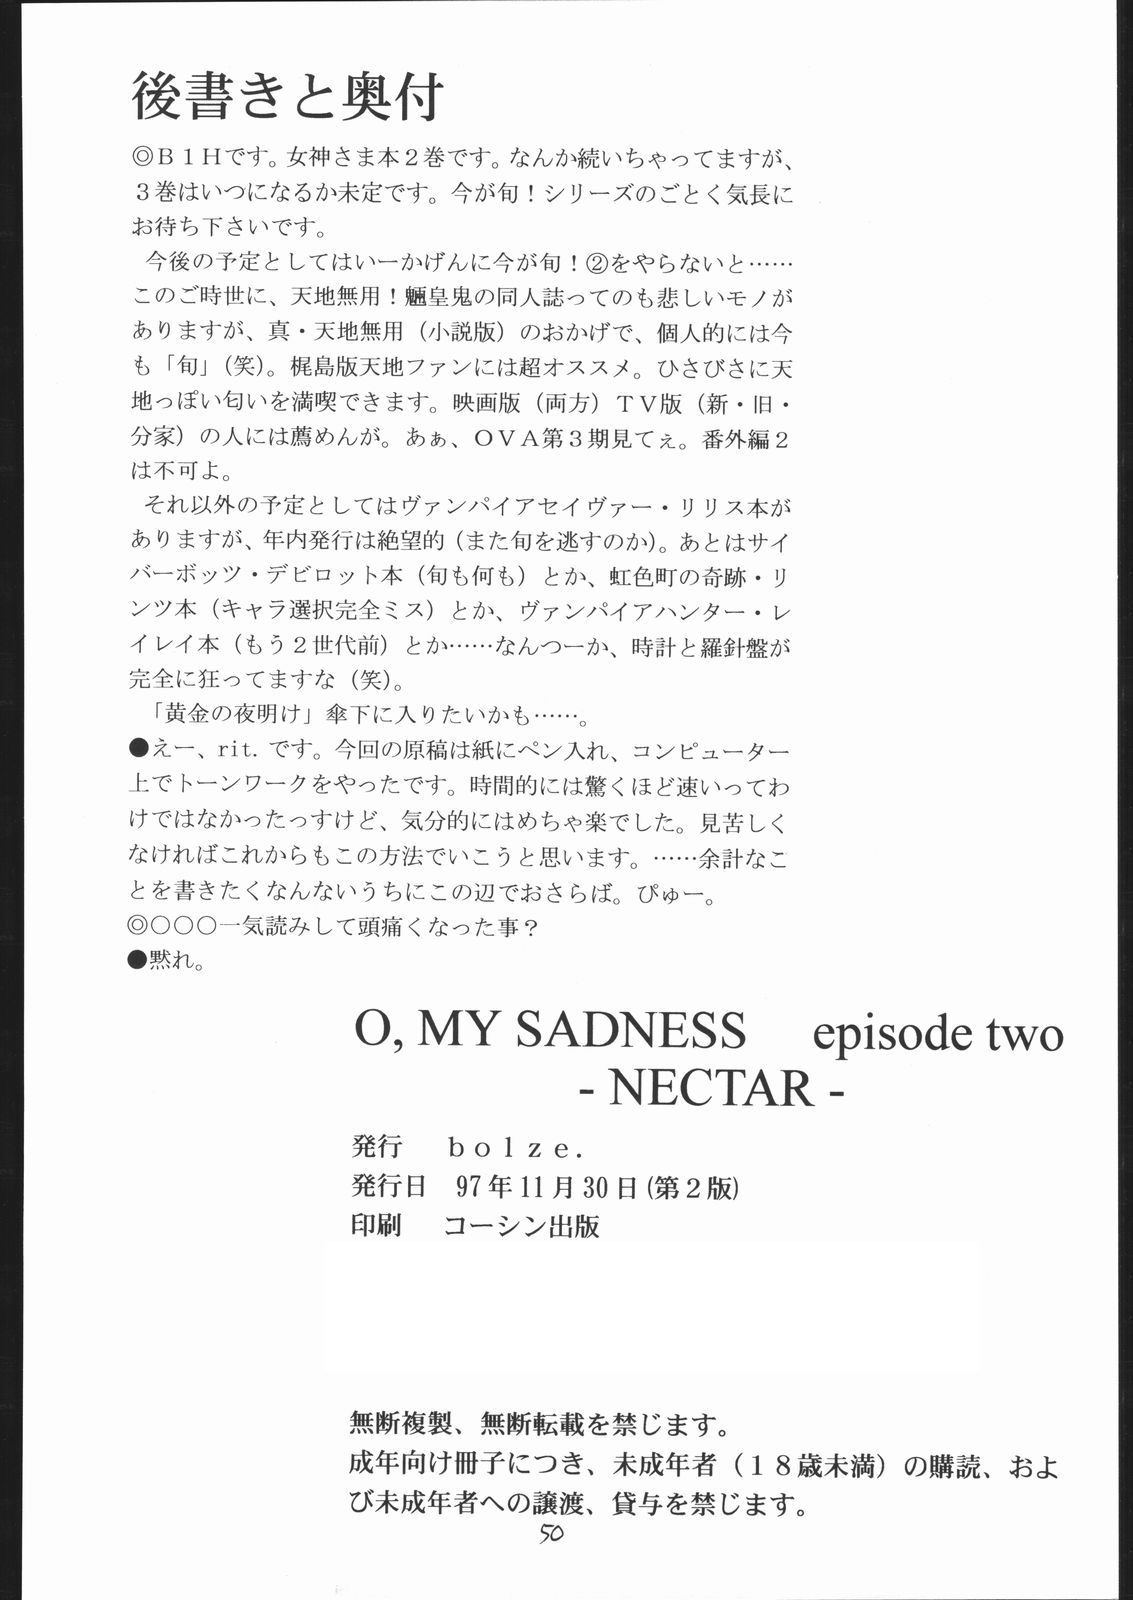 (Cレヴォ22) [bolze. (B1H、rit.)] O, MY SADNESS episode two -NECTAR- (ああっ女神さまっ)